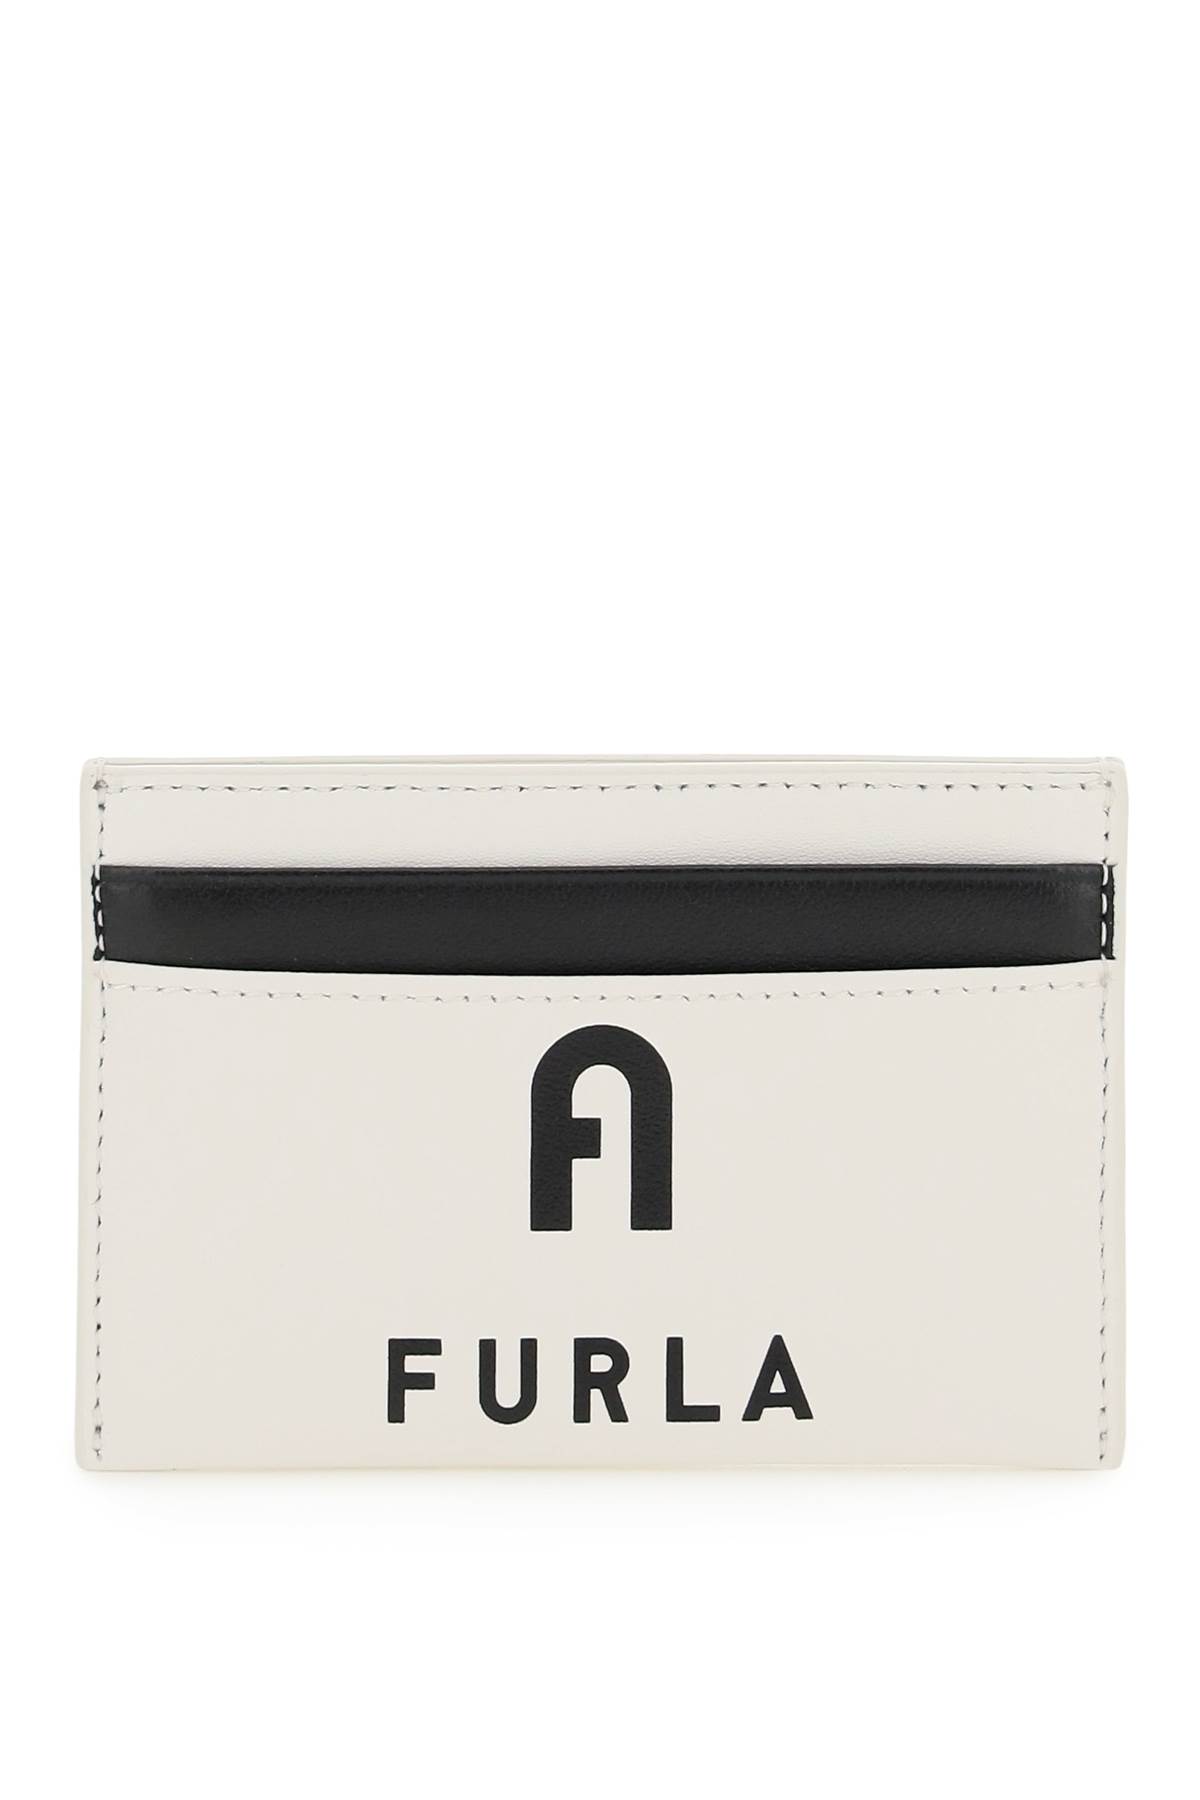 Furla Leather Iris Cardholder